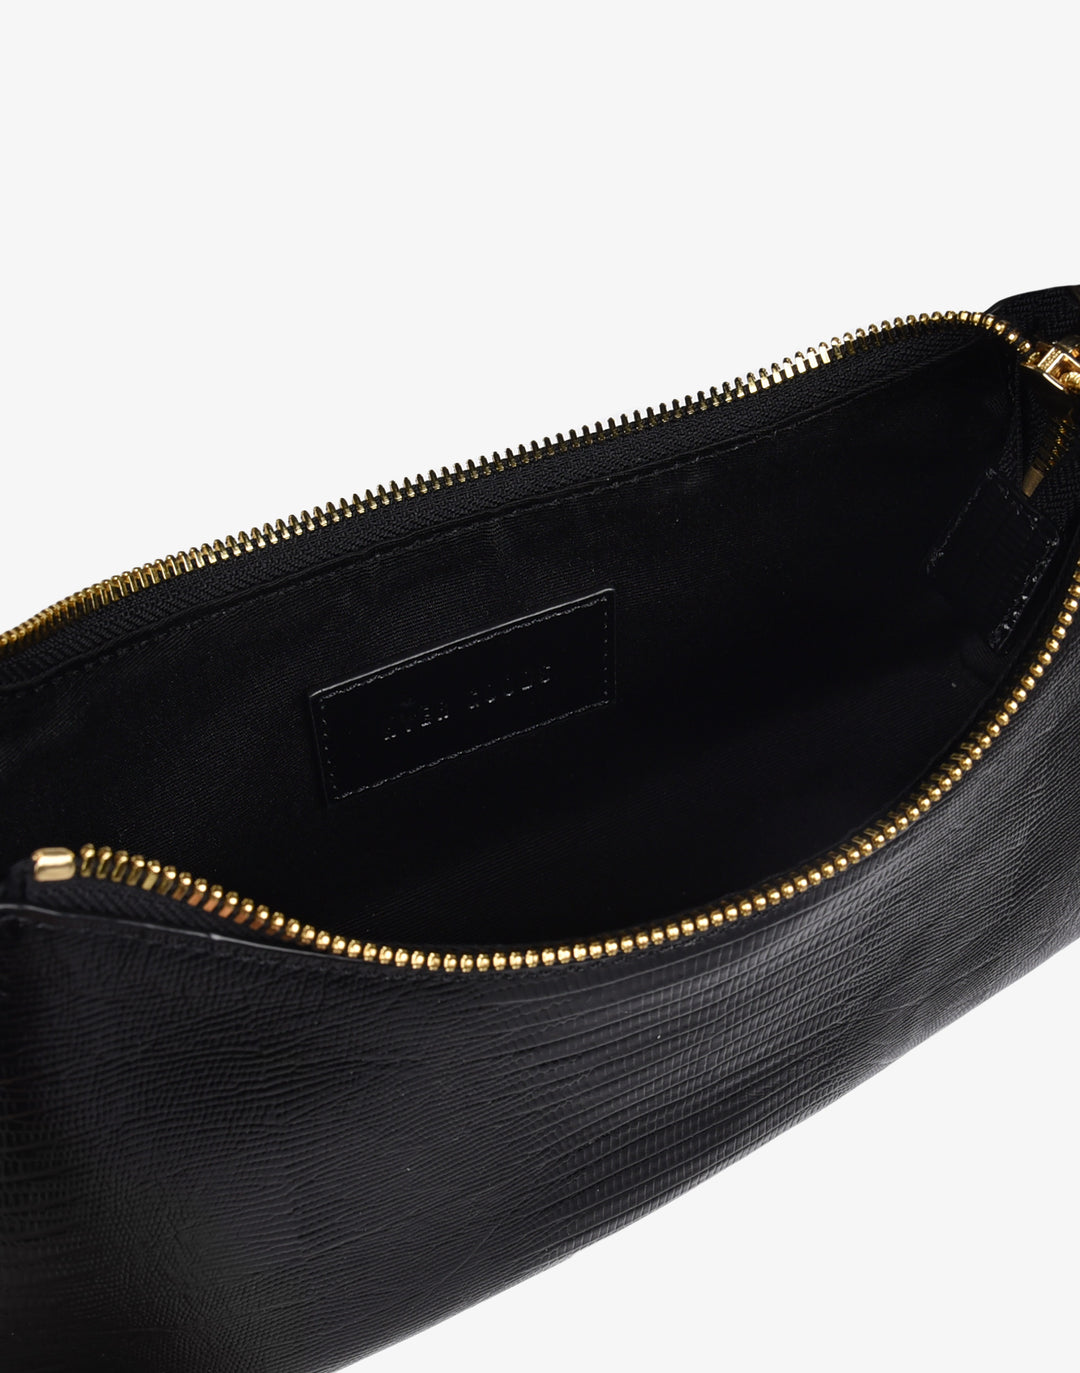 Black leather wallet/mini bag